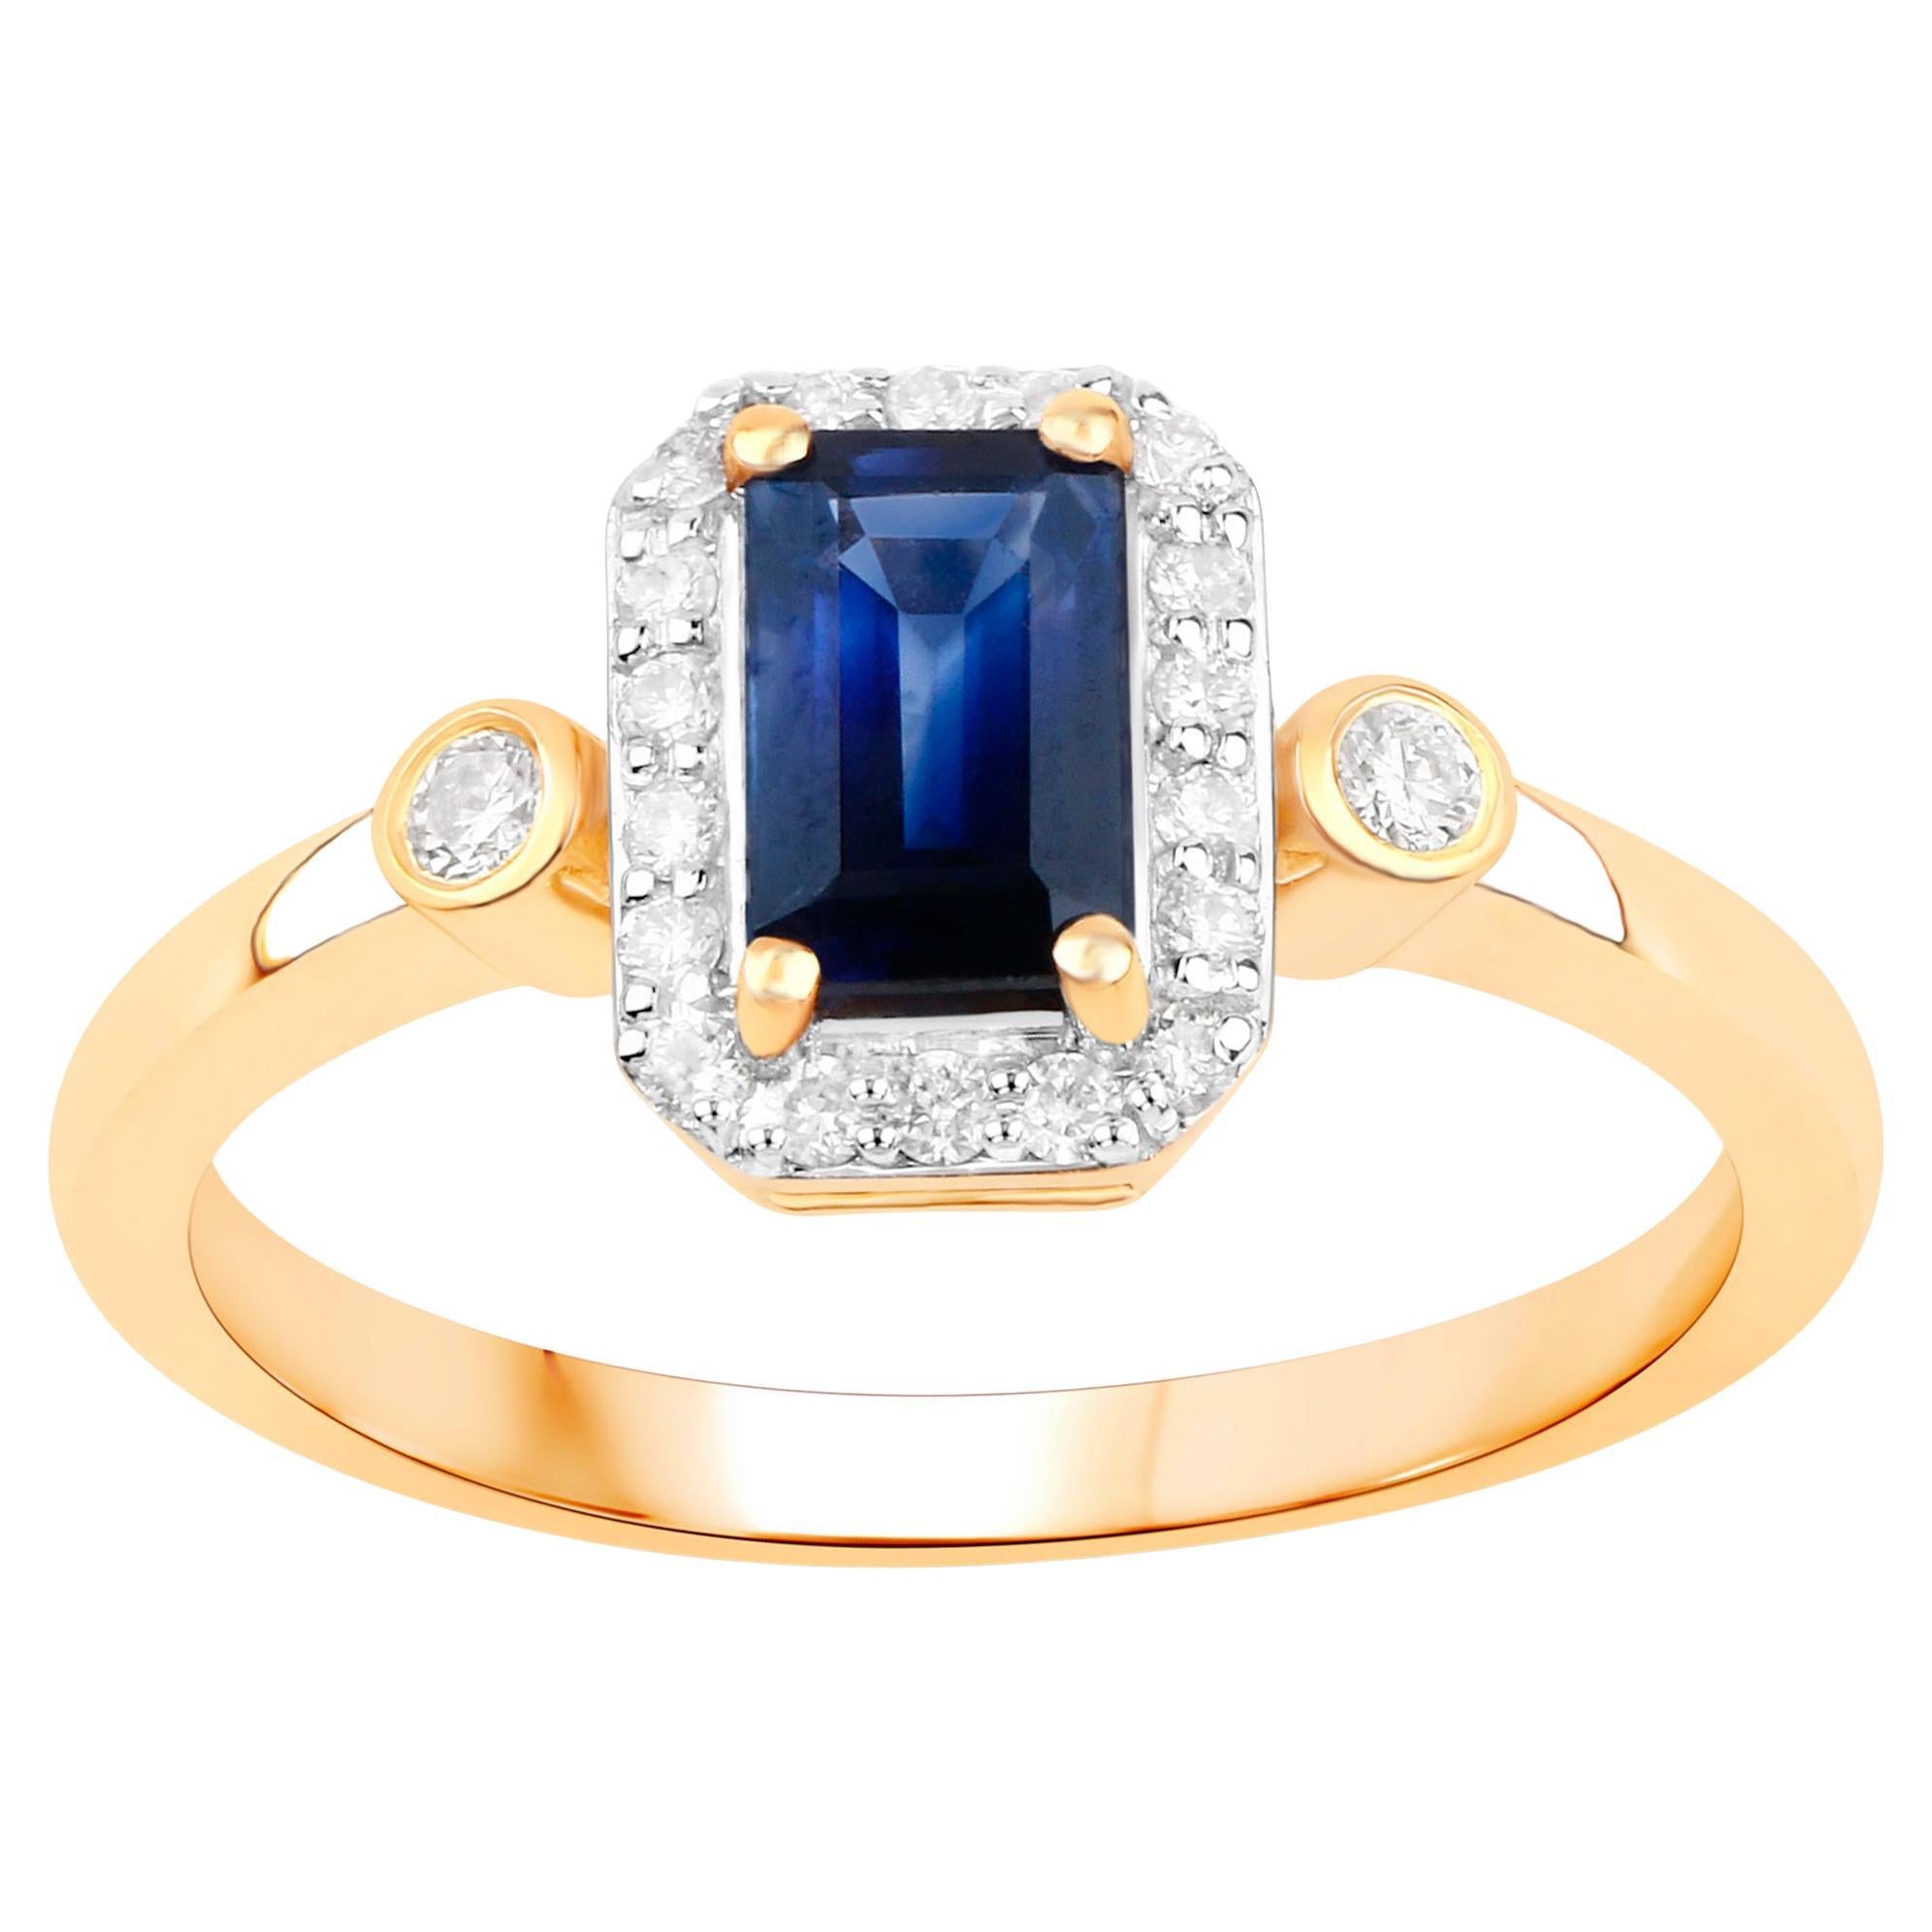 Bague en or jaune 14 carats avec saphir bleu et diamants 1,08 carats